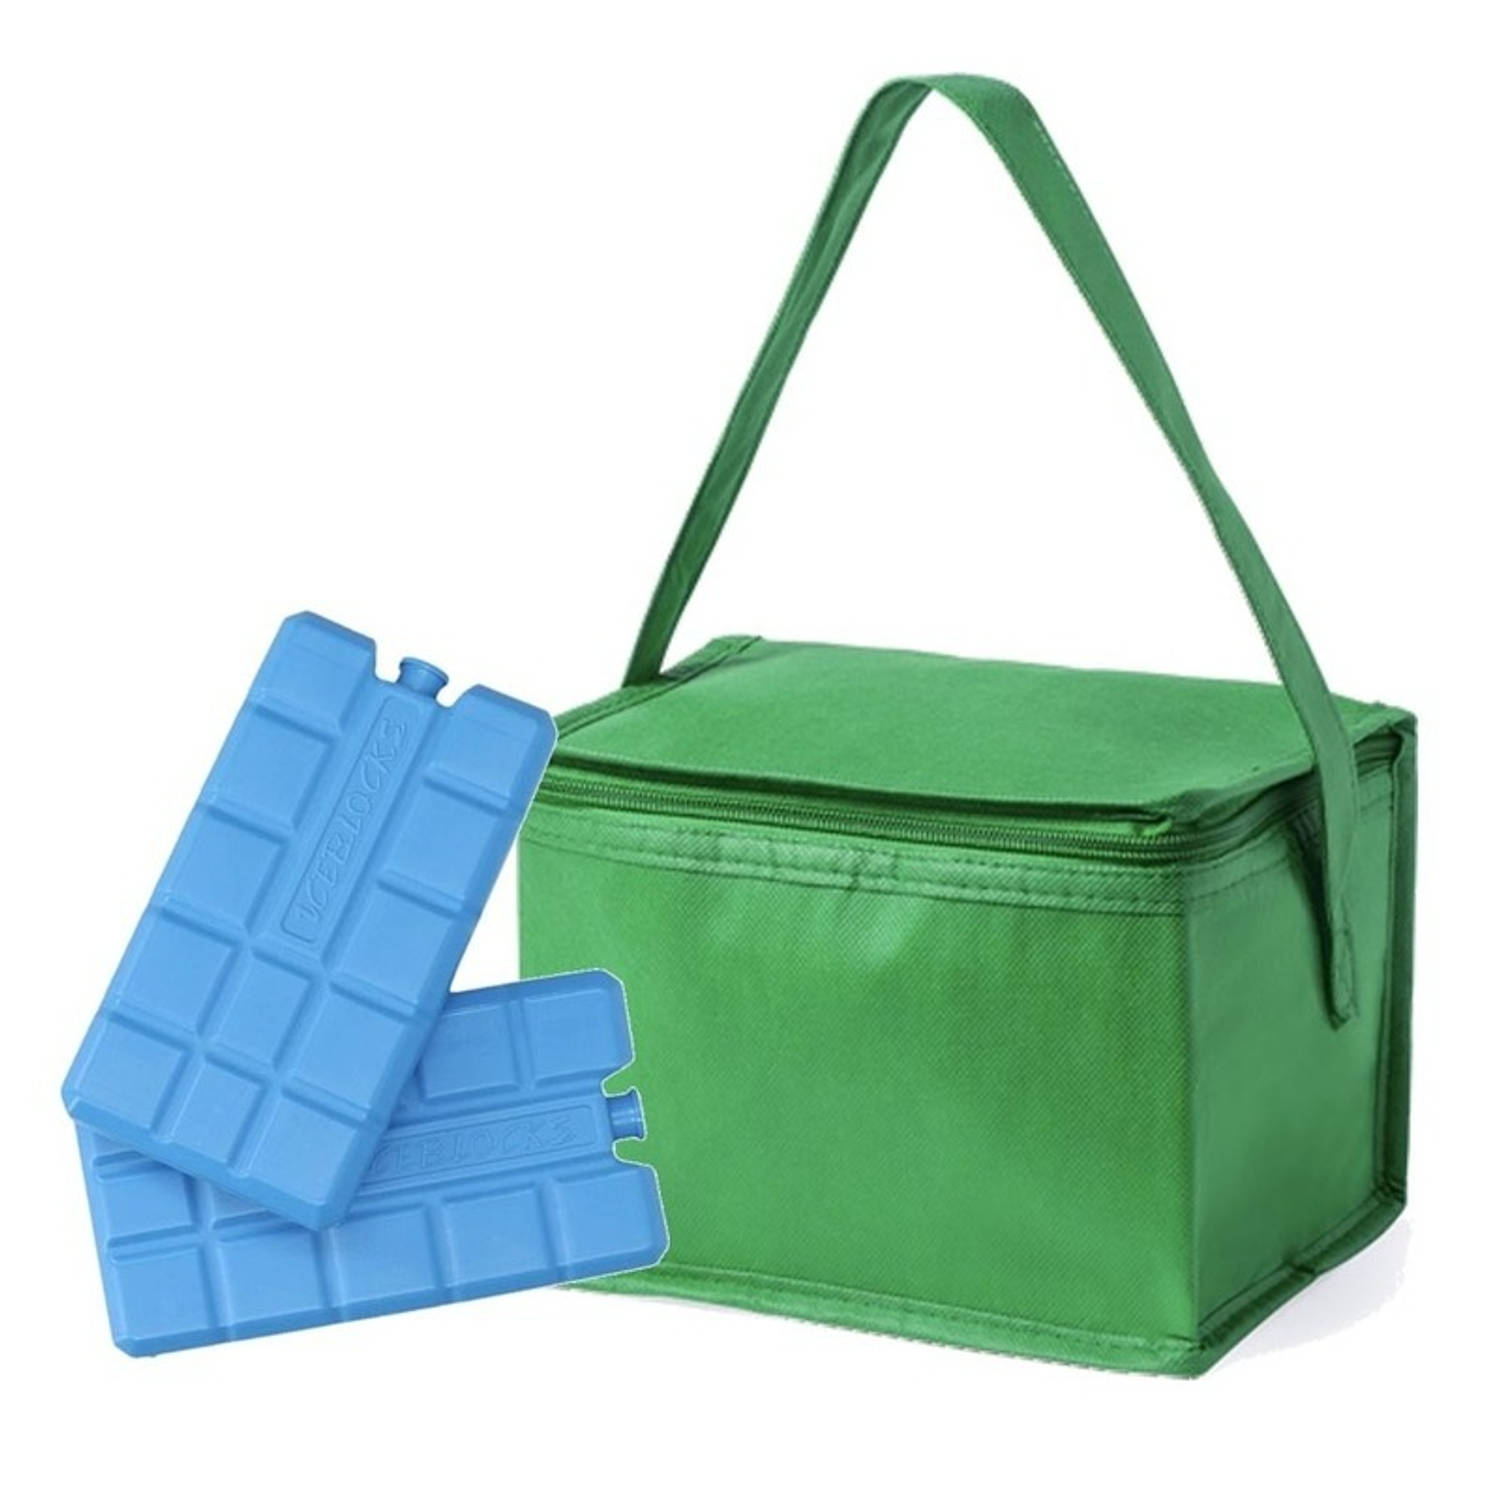 Strand sixpack mini koeltasje groen inclusief 2 koelelementen - Koeltas